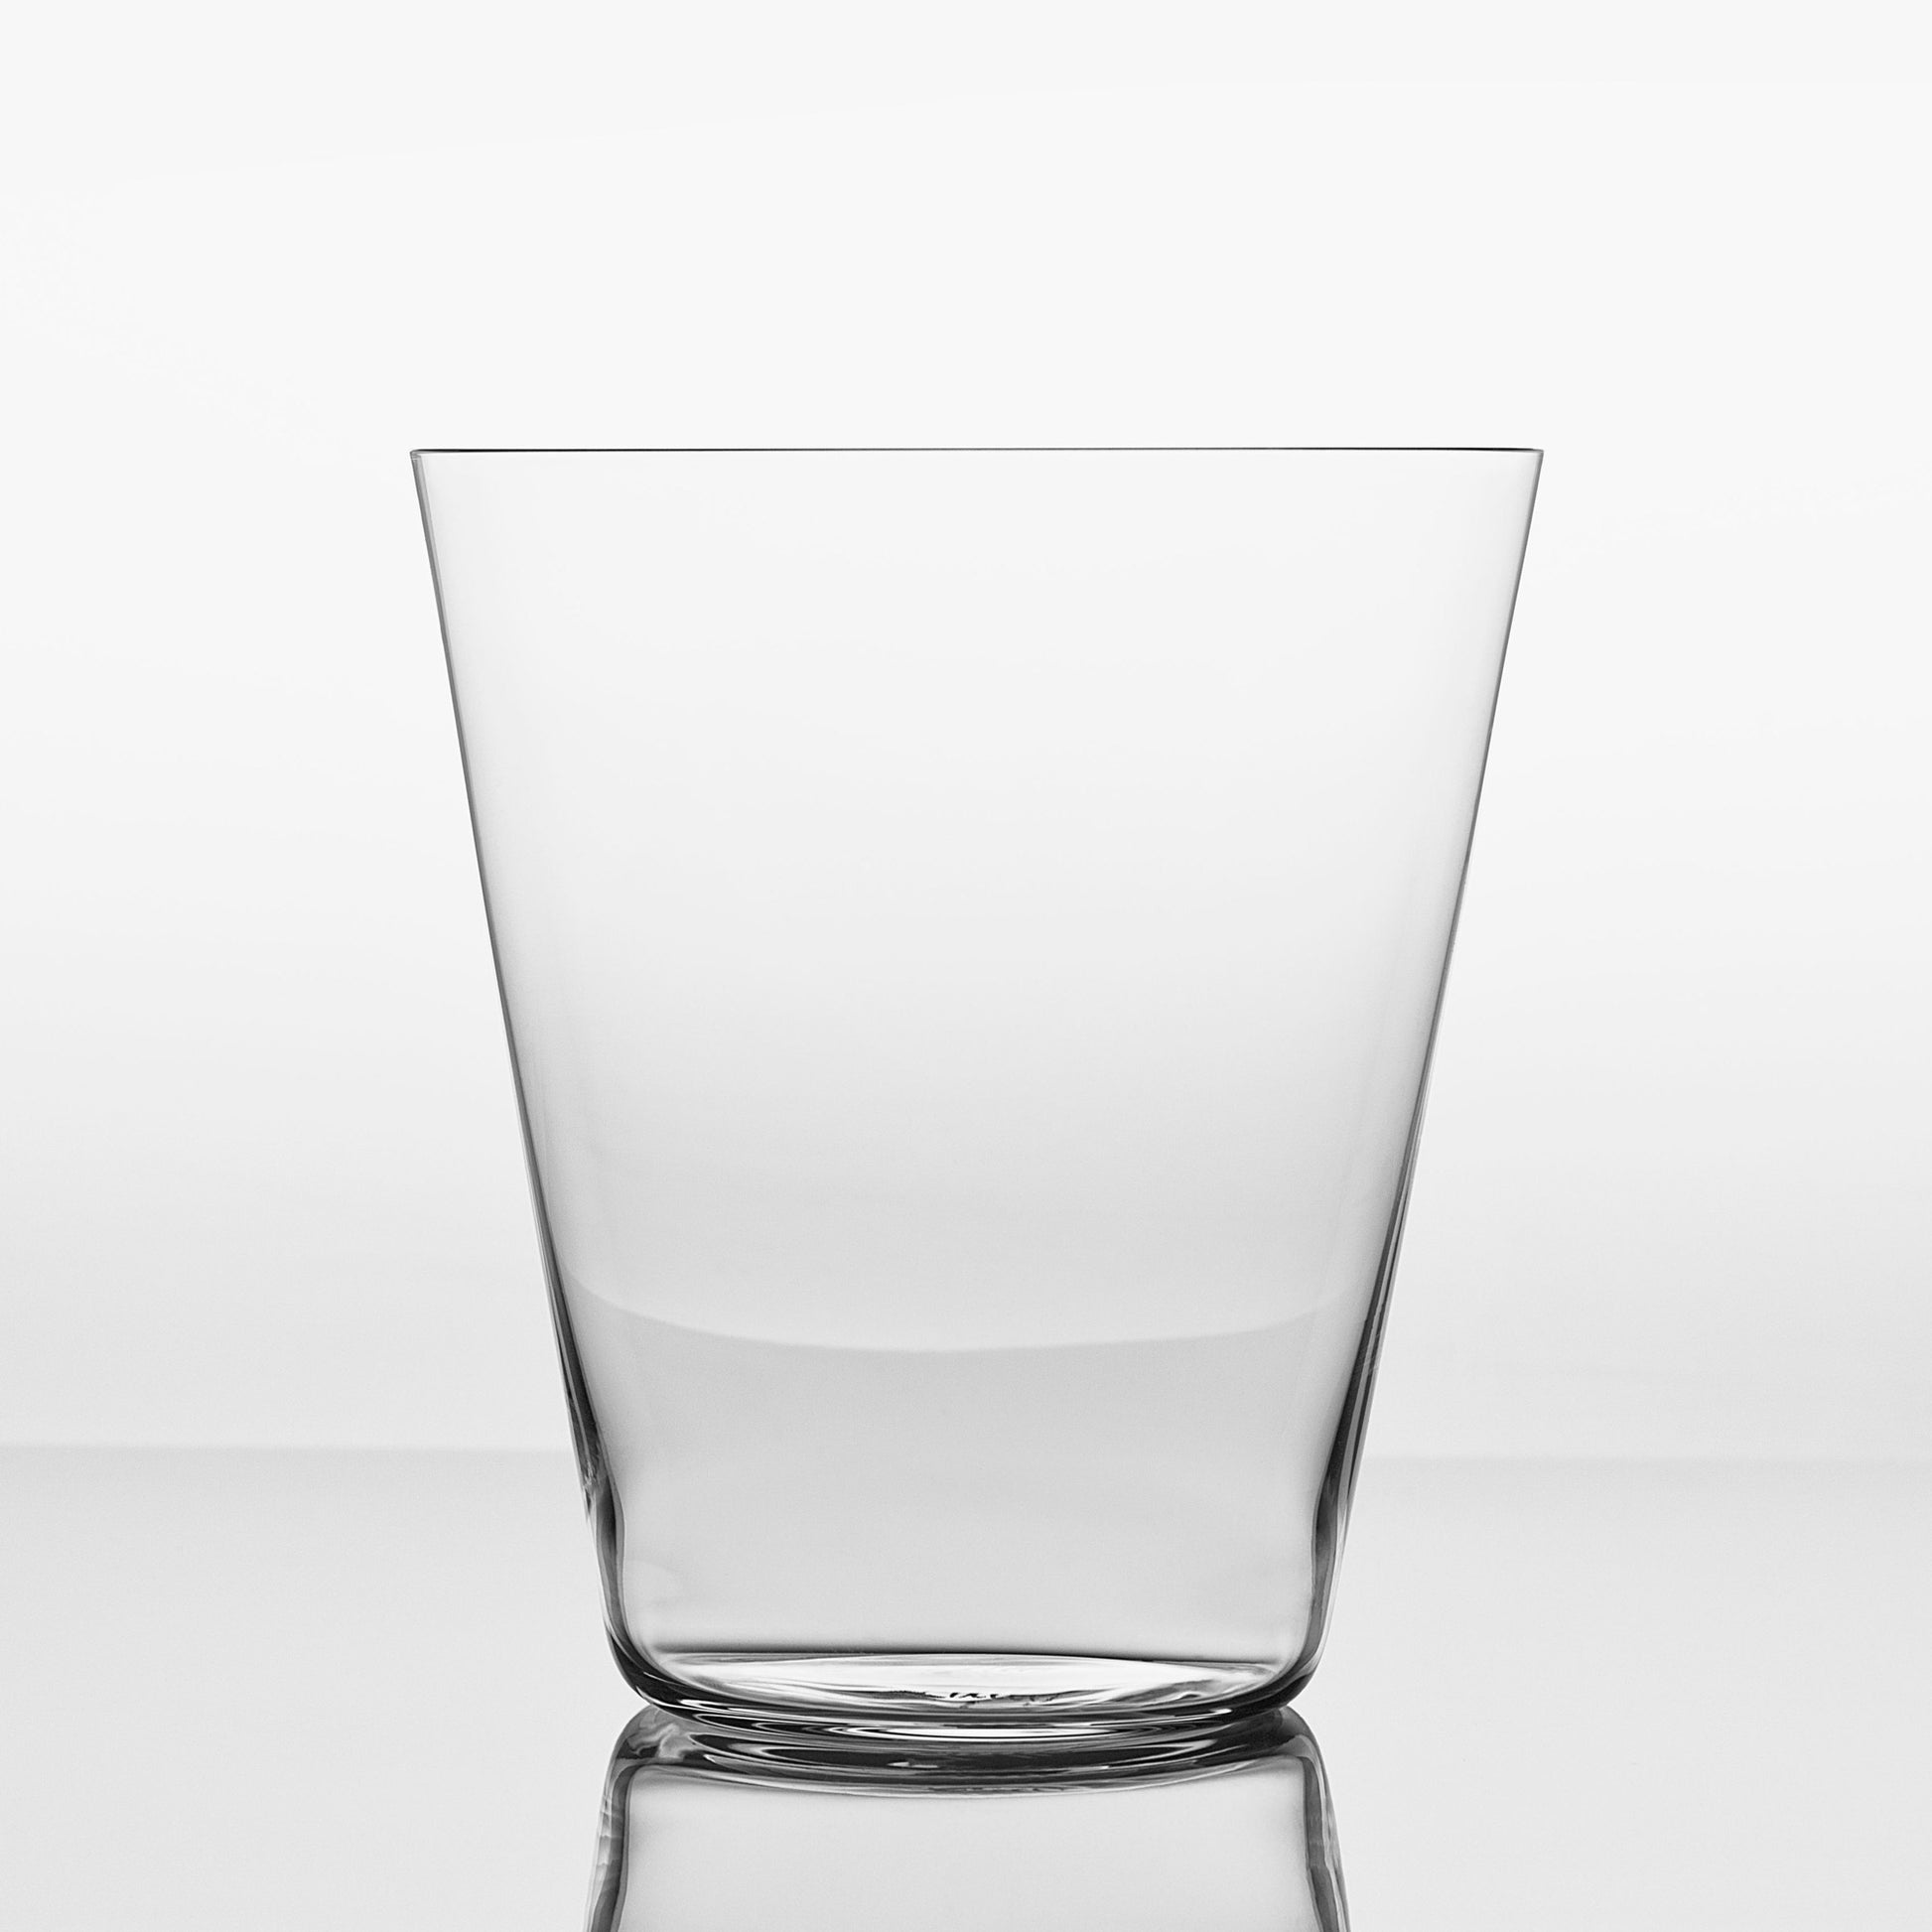 Zalto Denk'Art Cocktail / Tumbler Glass – The Manufactory